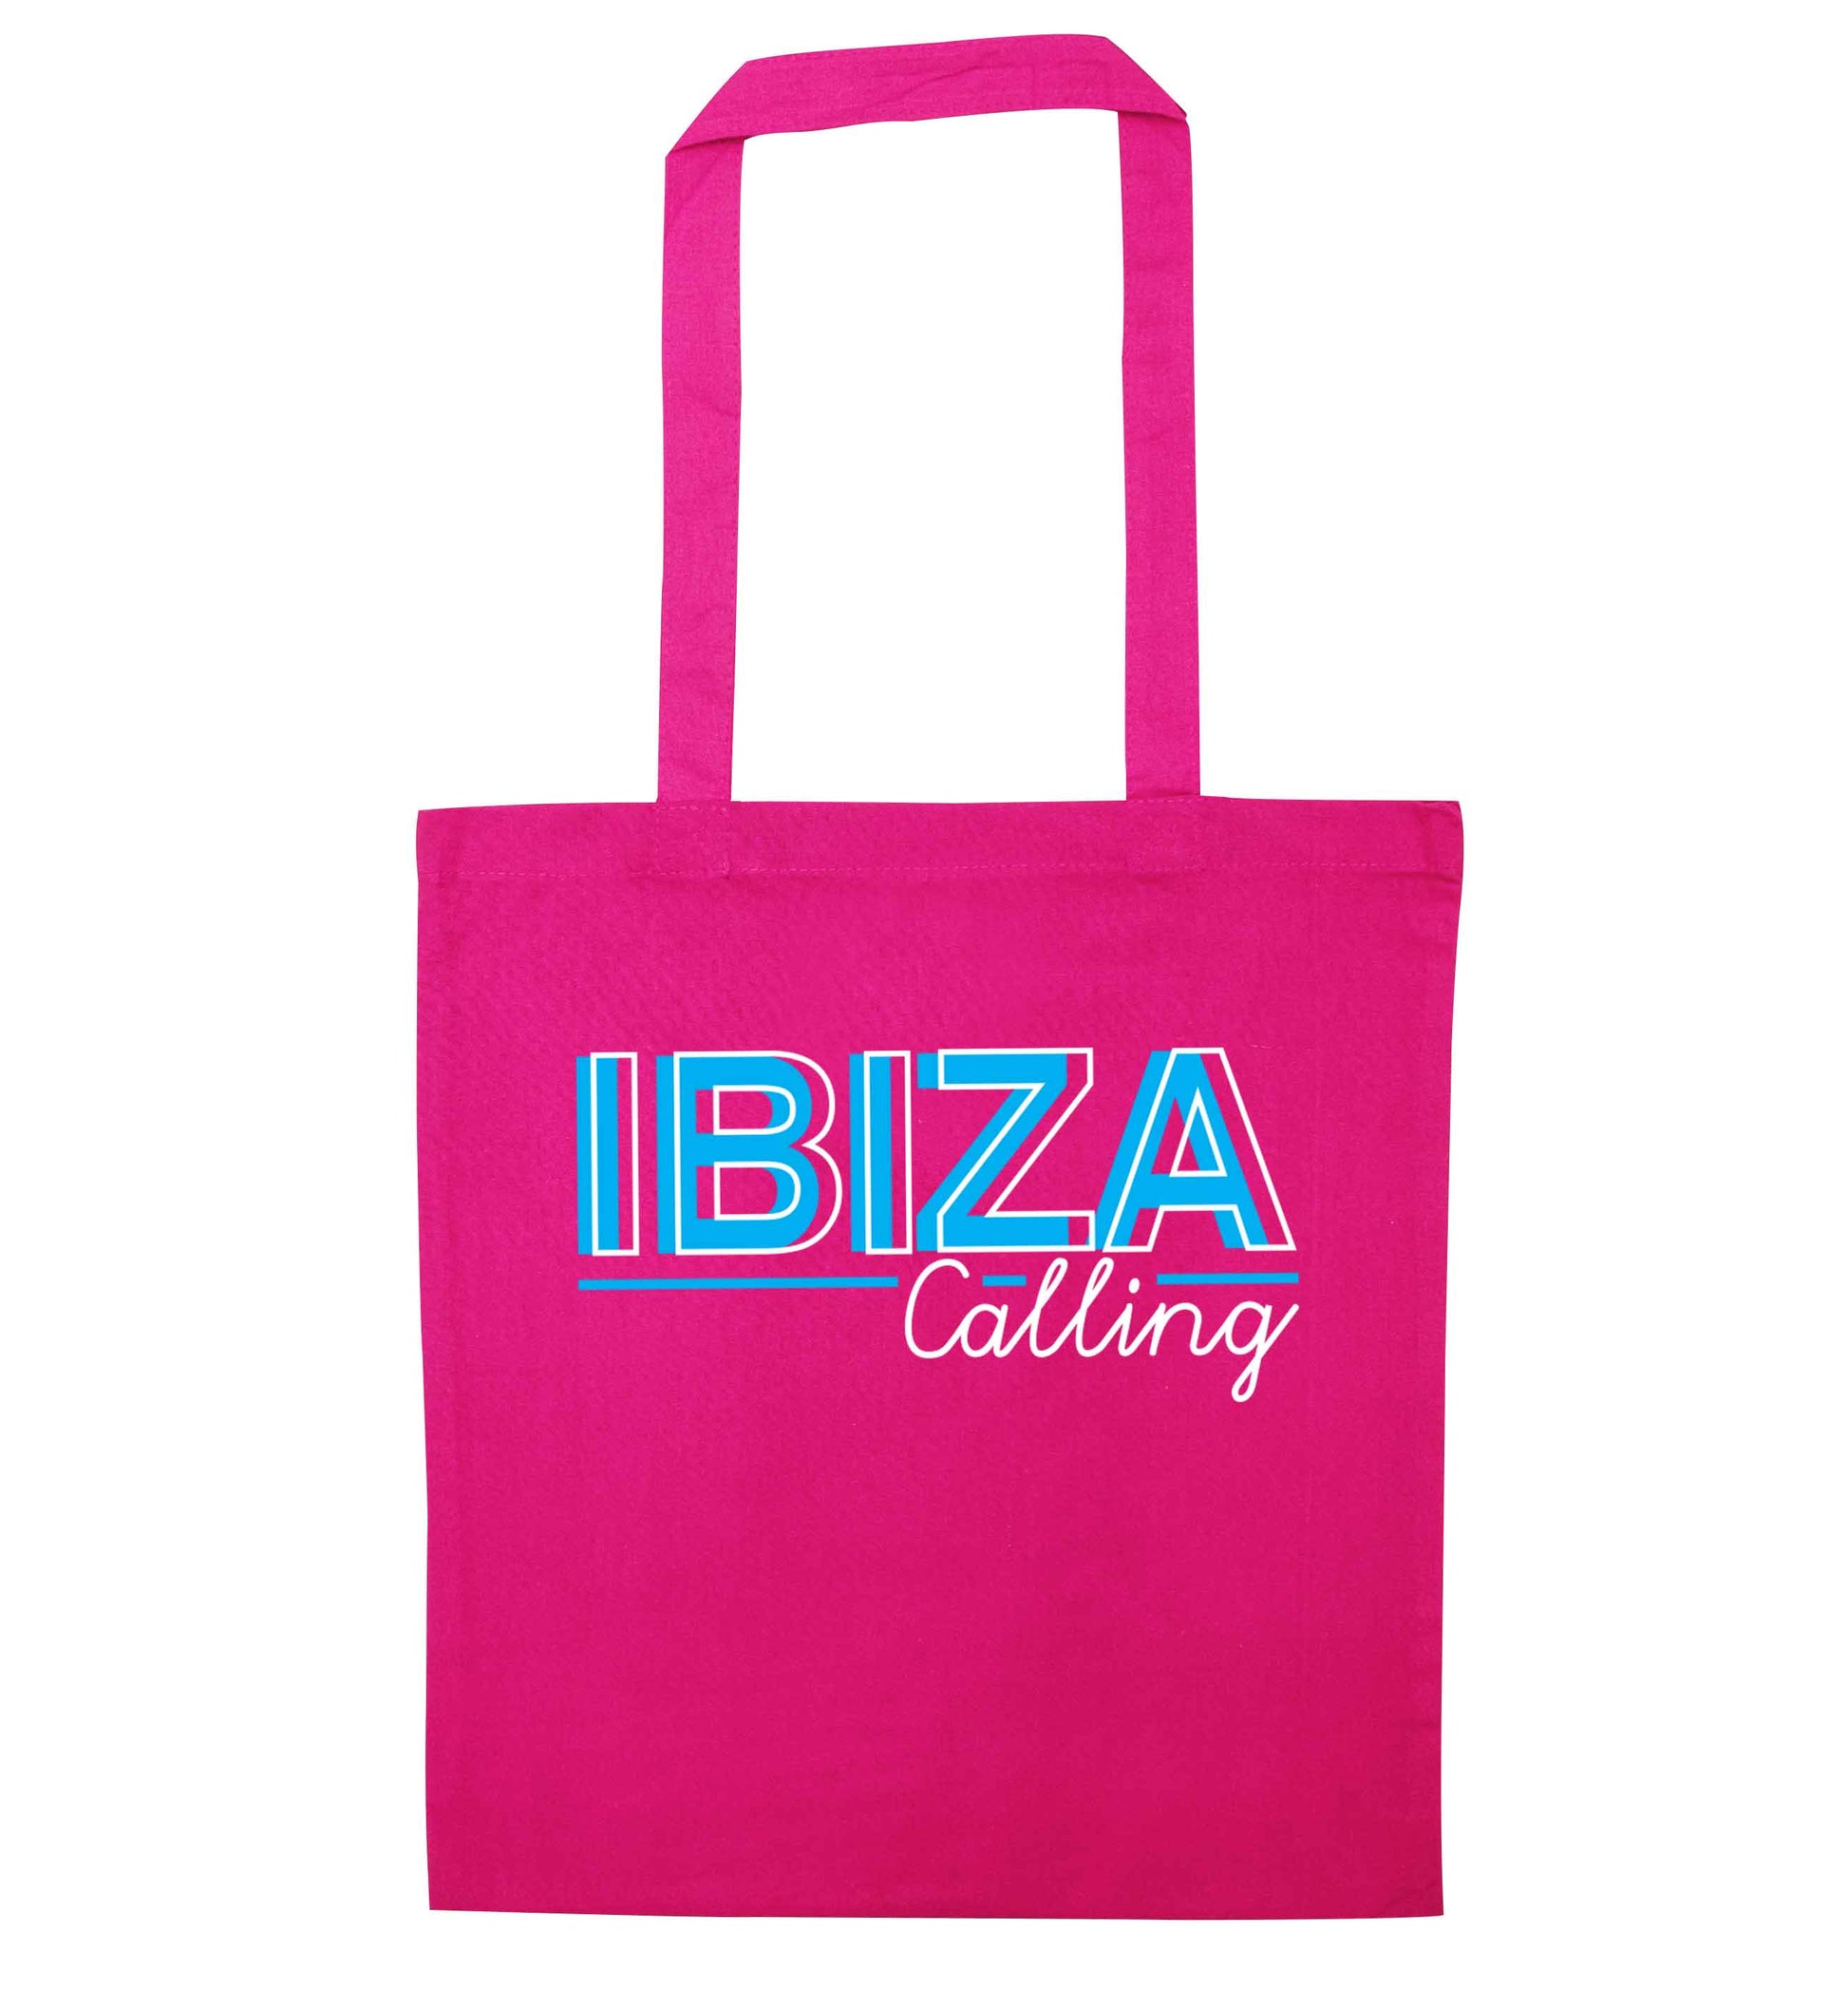 Ibiza calling pink tote bag